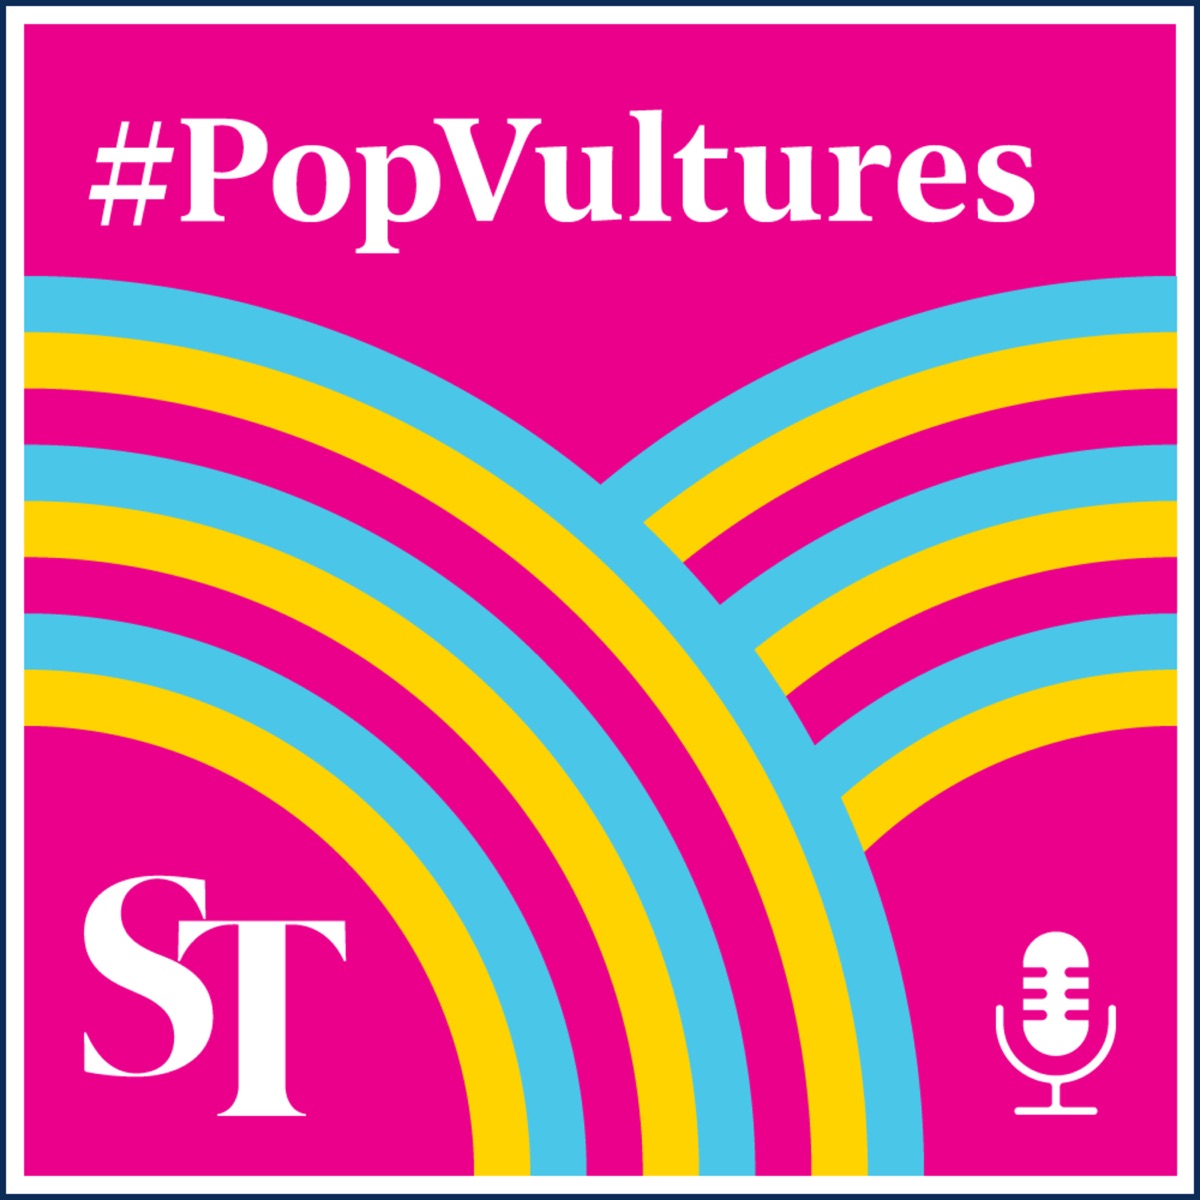 PopVultures – Podcast